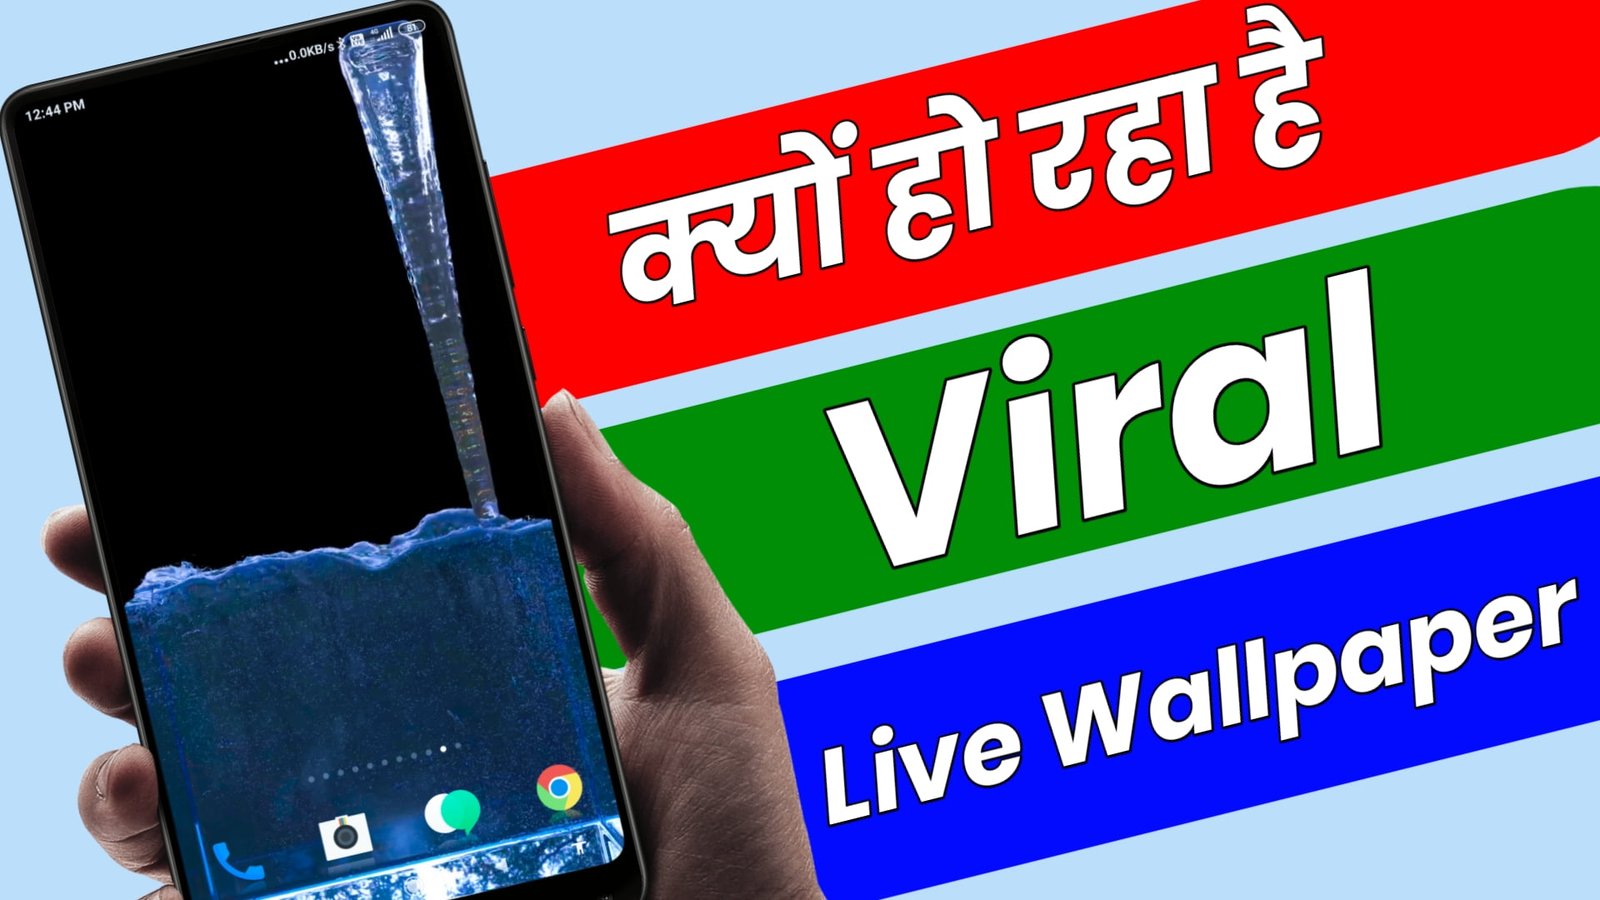 Download Samsung Galaxy S10 Plus Water Drop Live Wallpapers - DK Tech Hindi